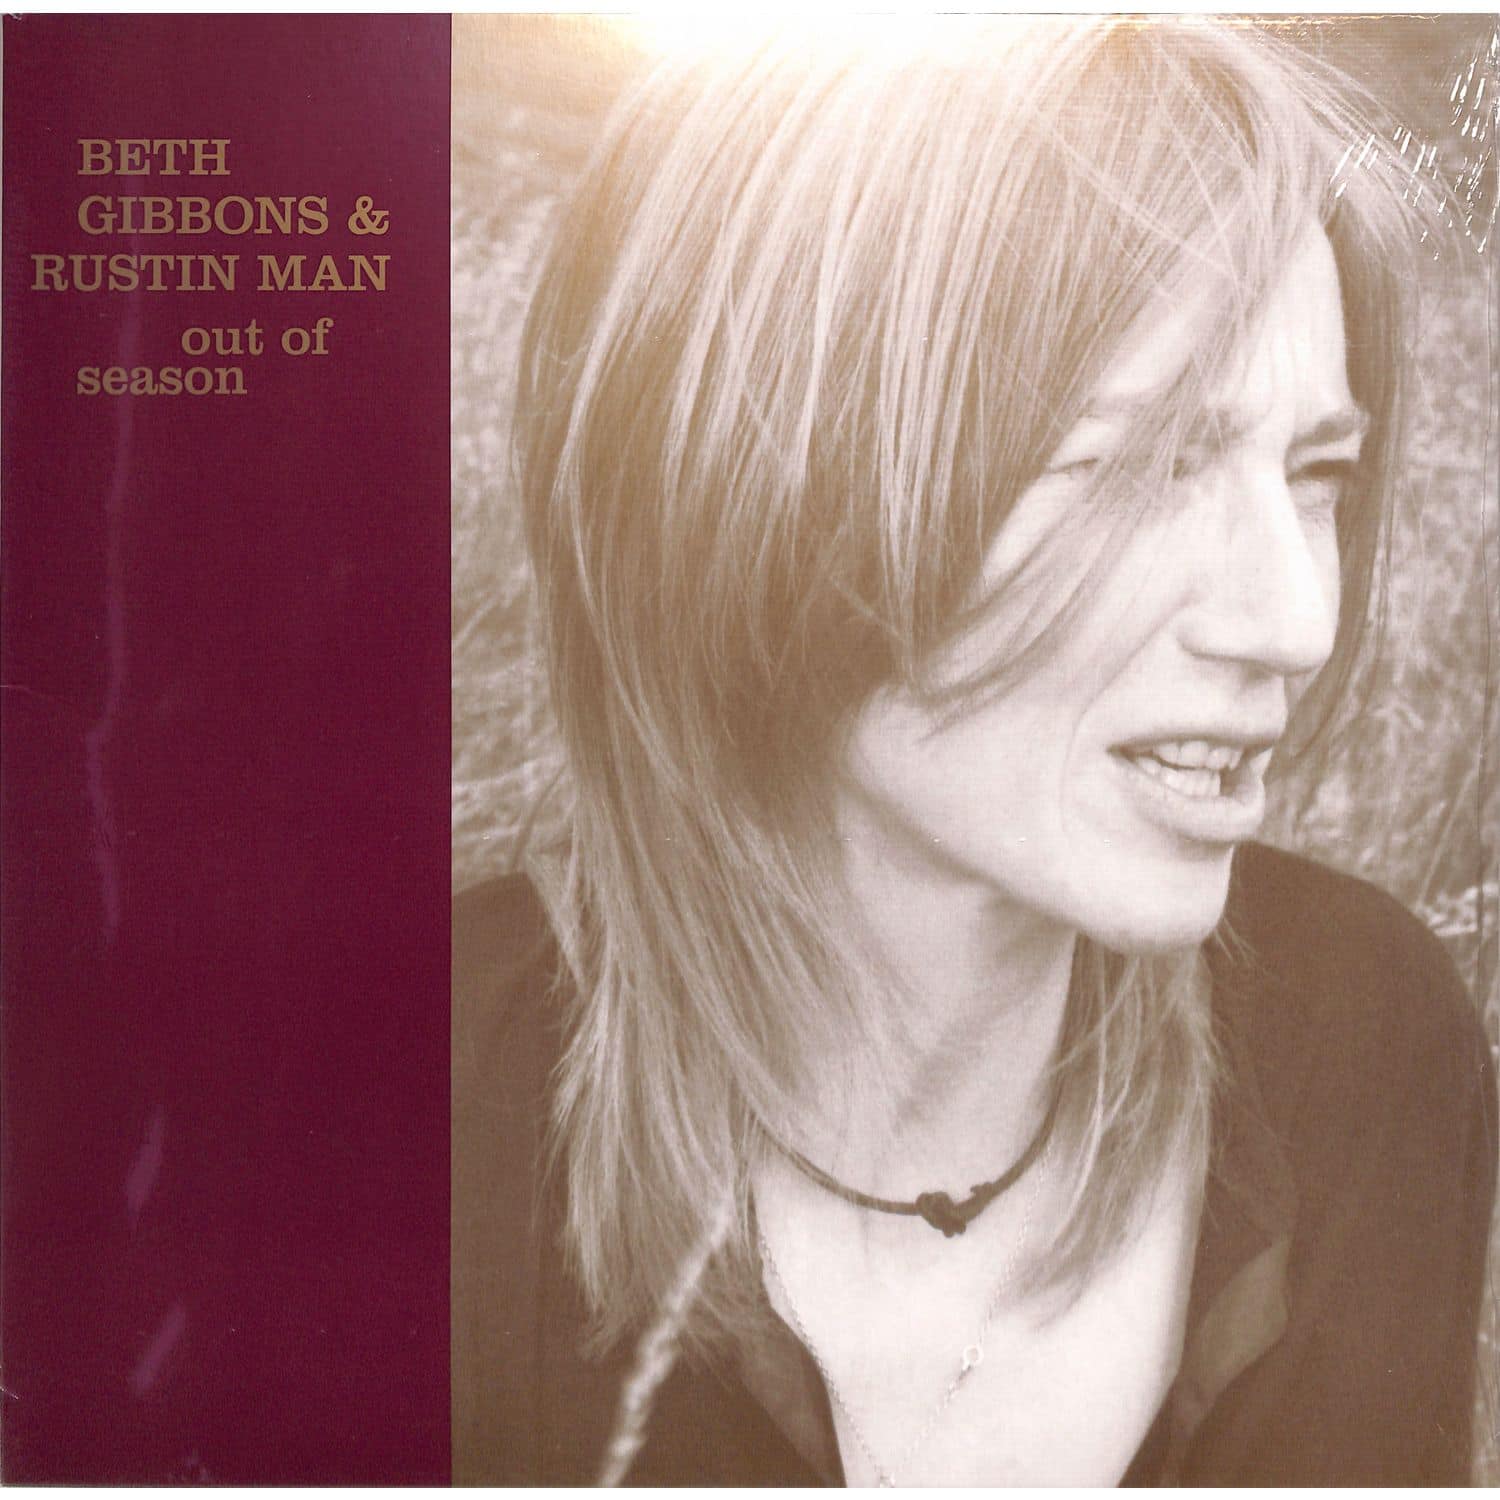 Beth Gibbons & Rustin Man - OUT OF SEASON 